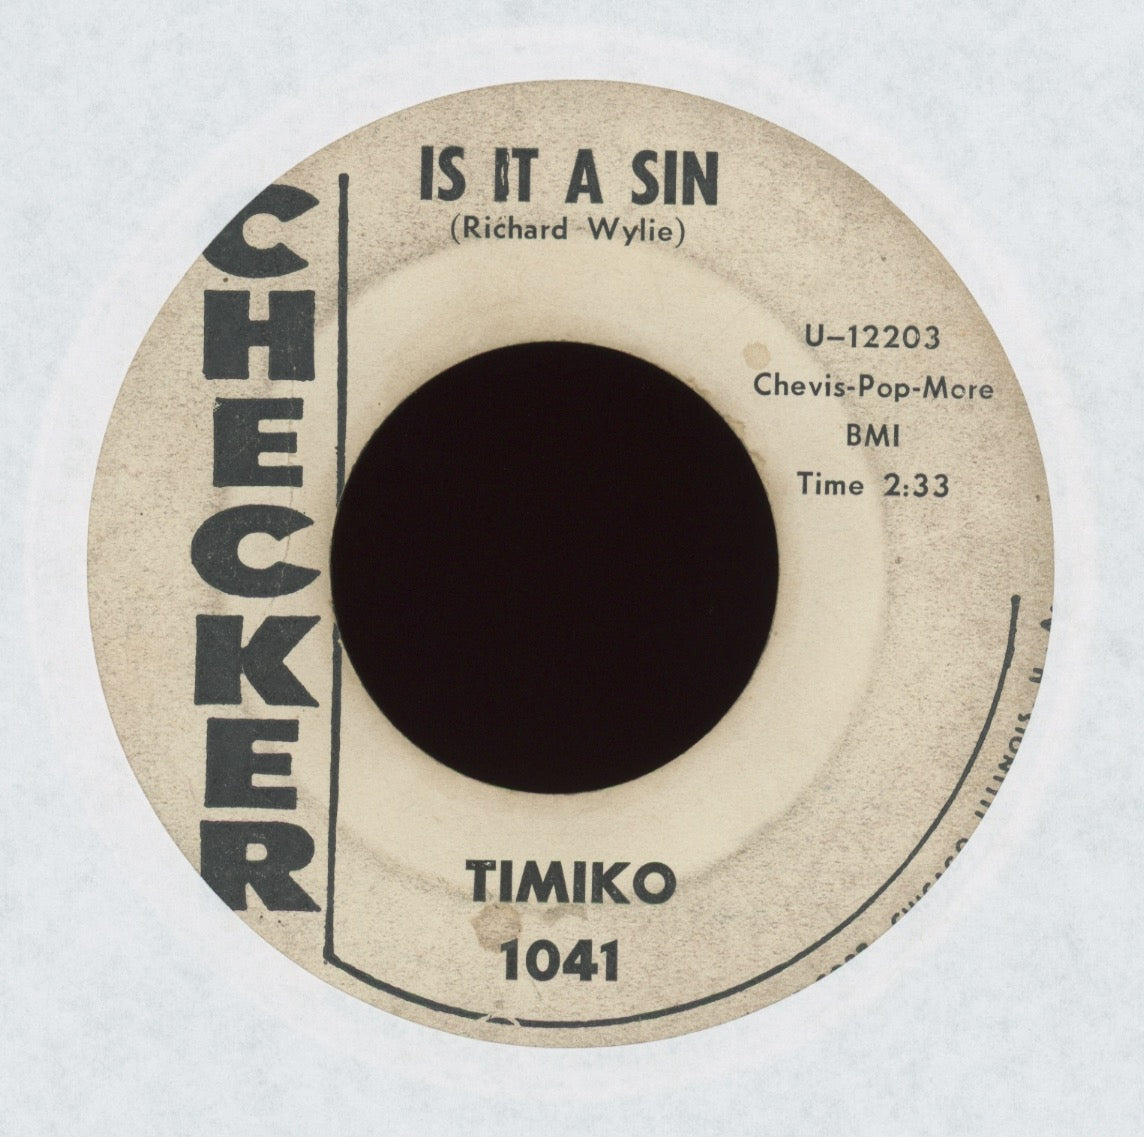 Timiko Jones - Is It A Sin on Checker Promo